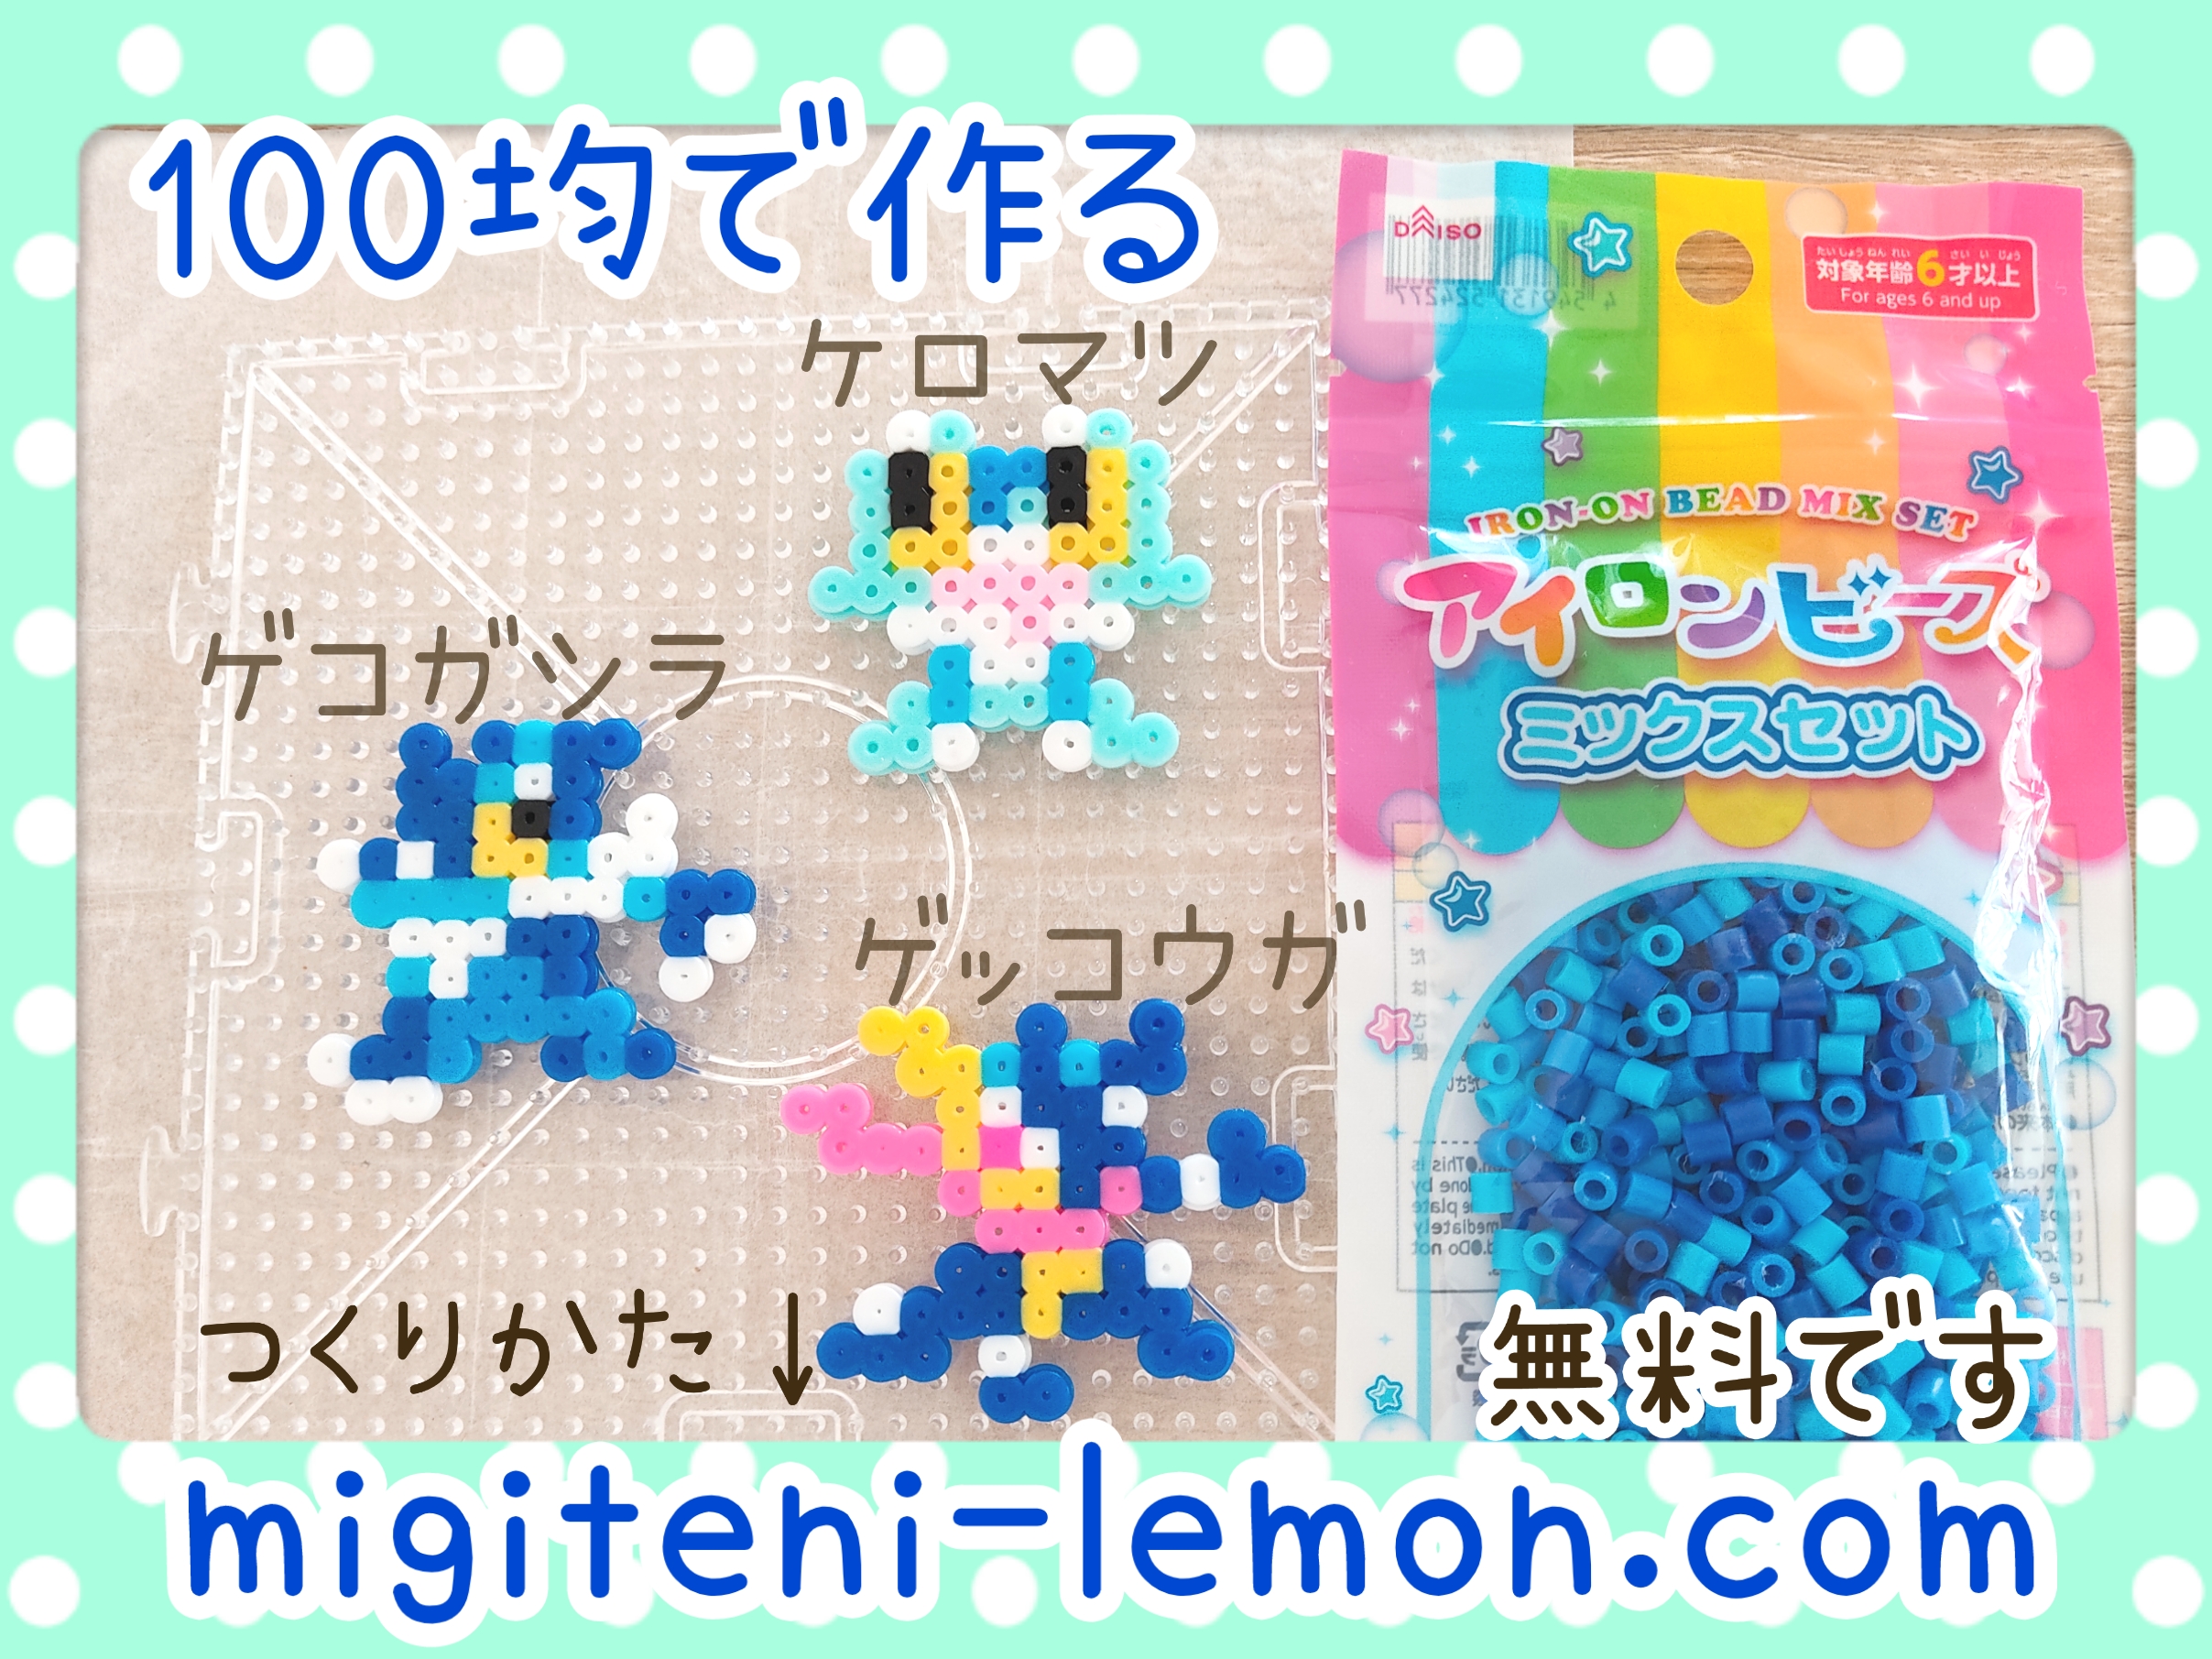 keromatsu-froakie-gekogashira-frogadier-kawaii-pokemon-unite-handmade-small-iron-beads-free-zuan-daiso-square